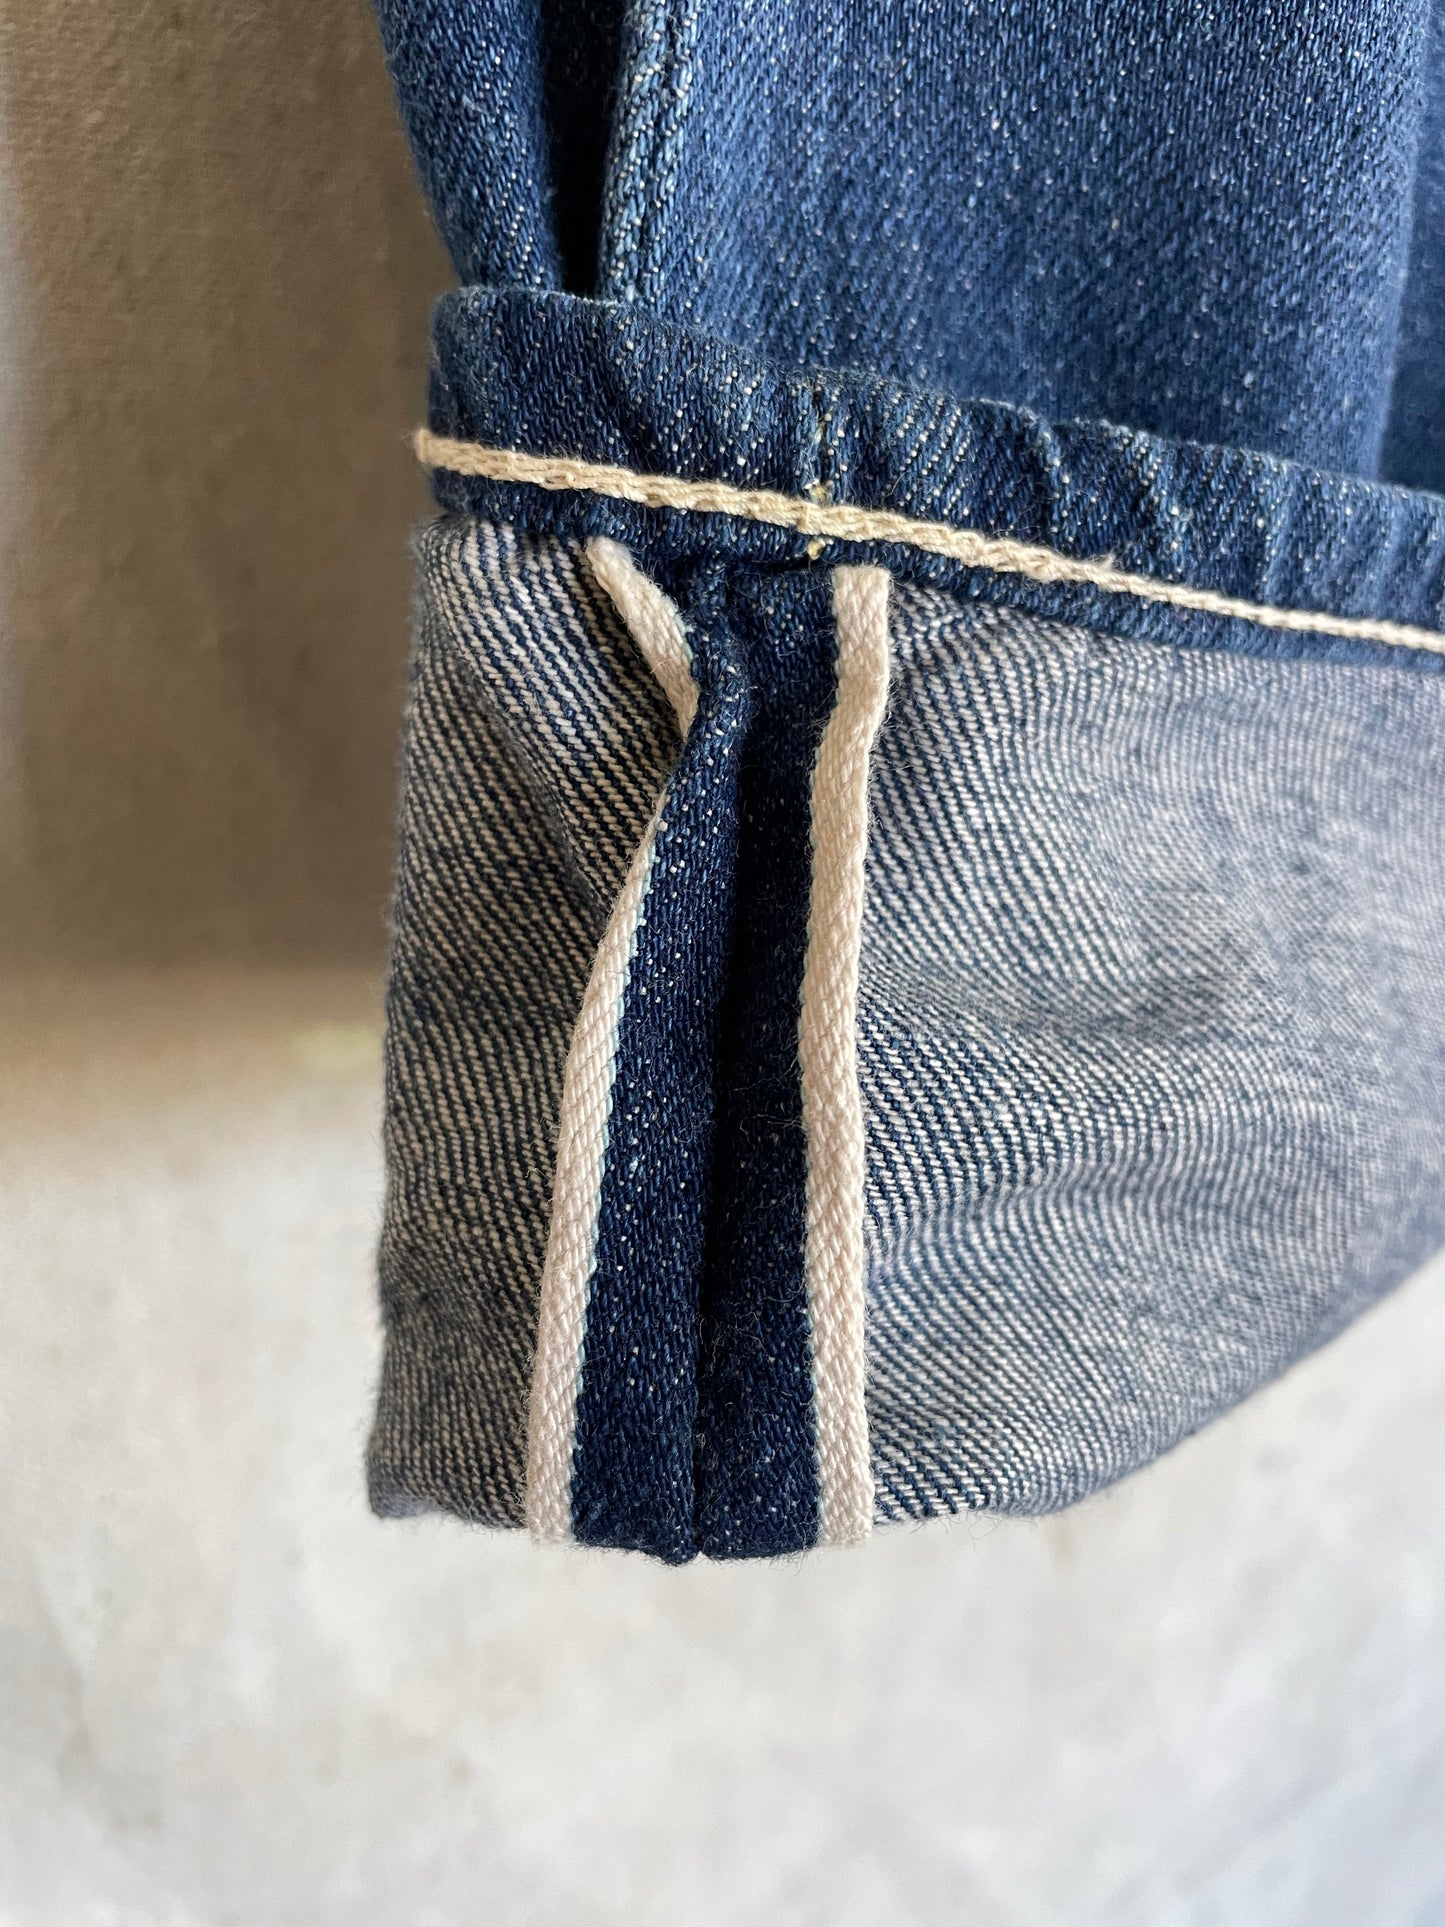 40s Lee Selvedge Denim Jeans